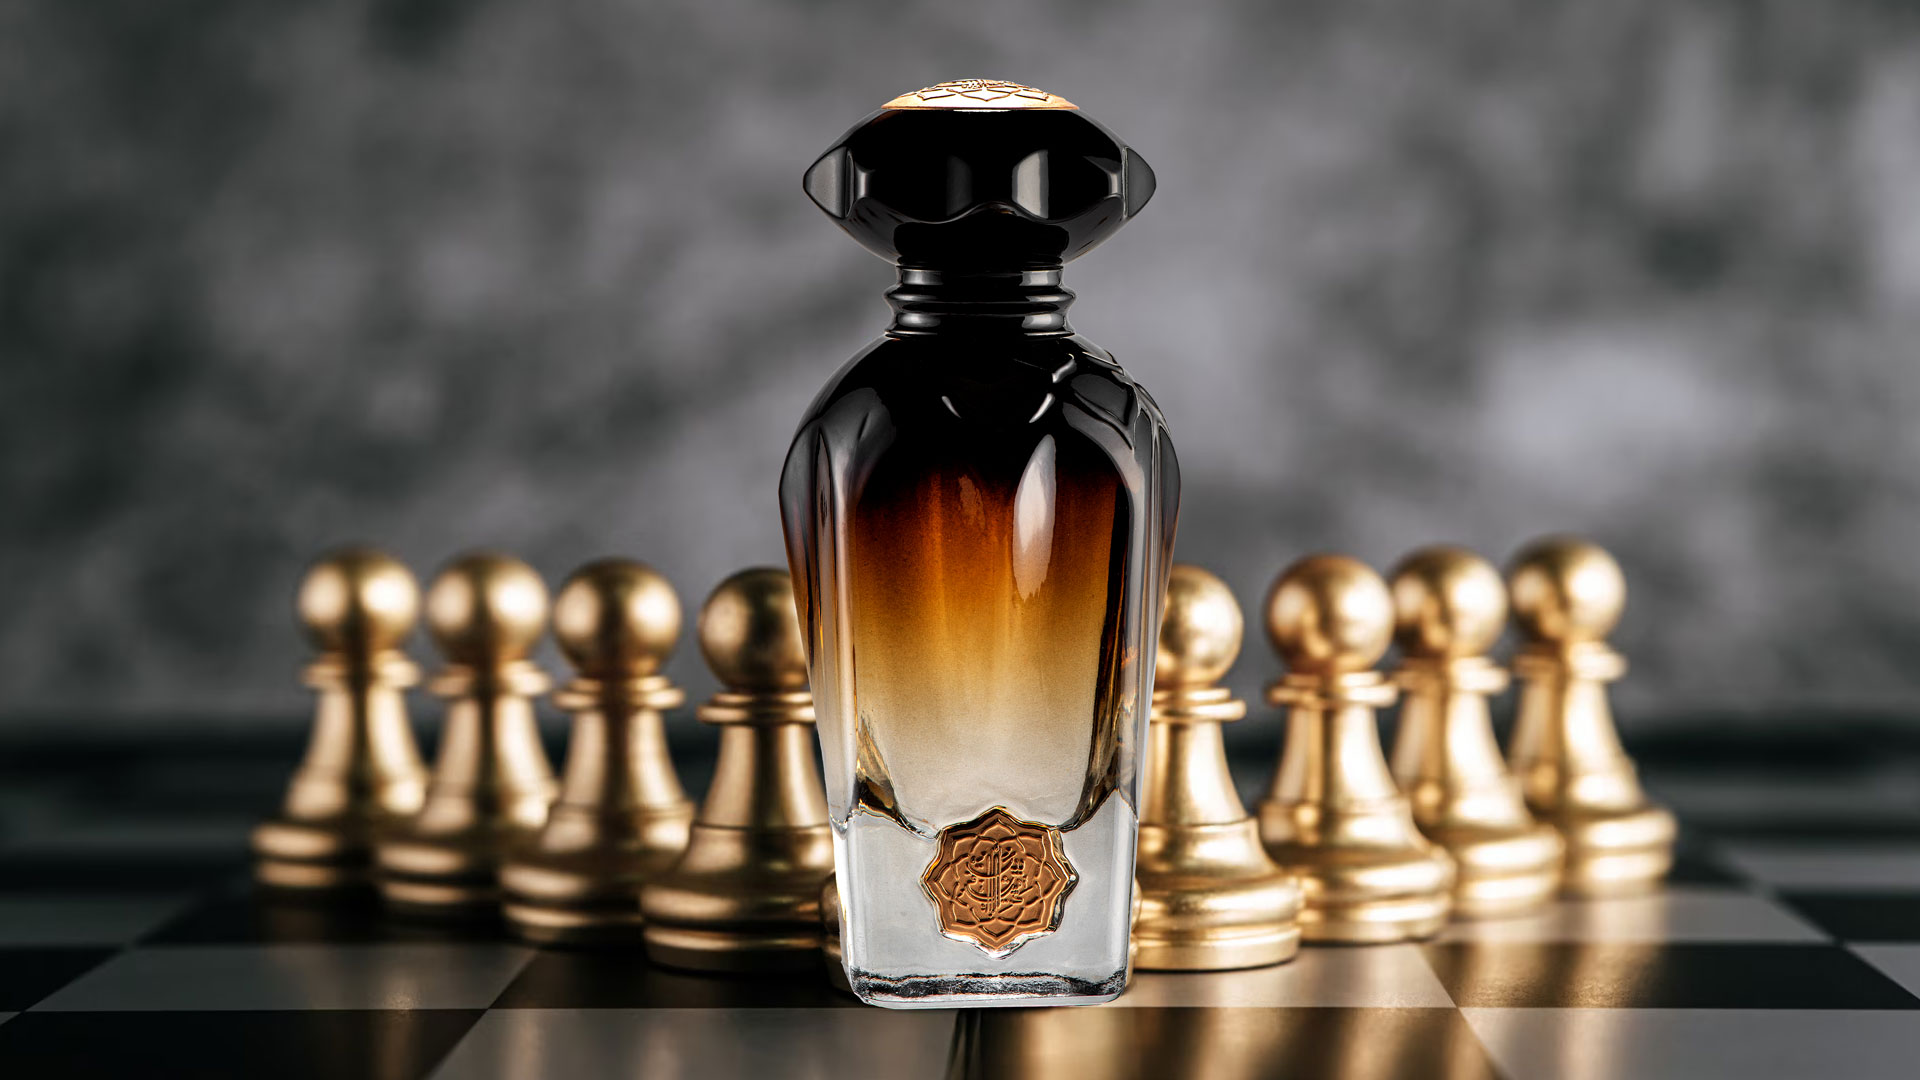 Get Ready to Spritz: Replica of Lancôme Perfumes in Dubai, UAE